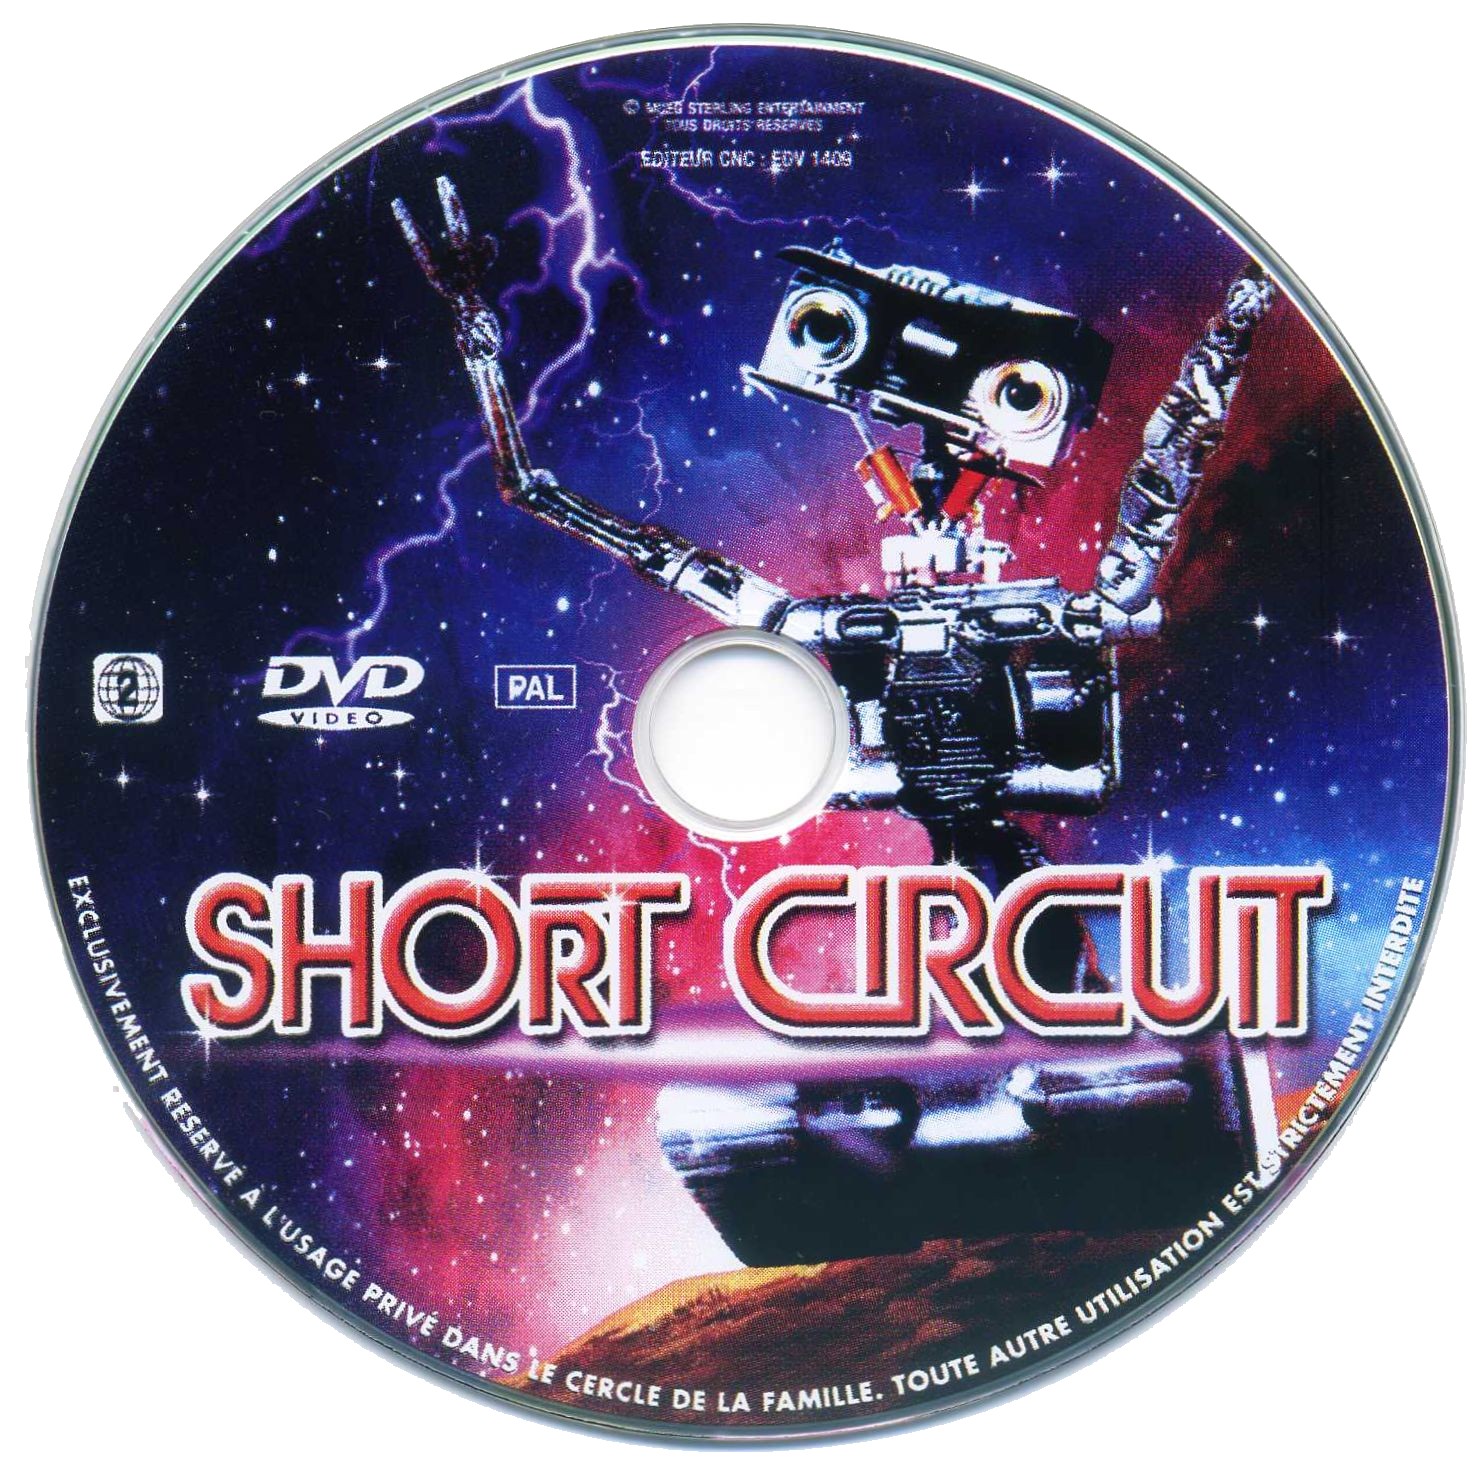 Short circuit v2